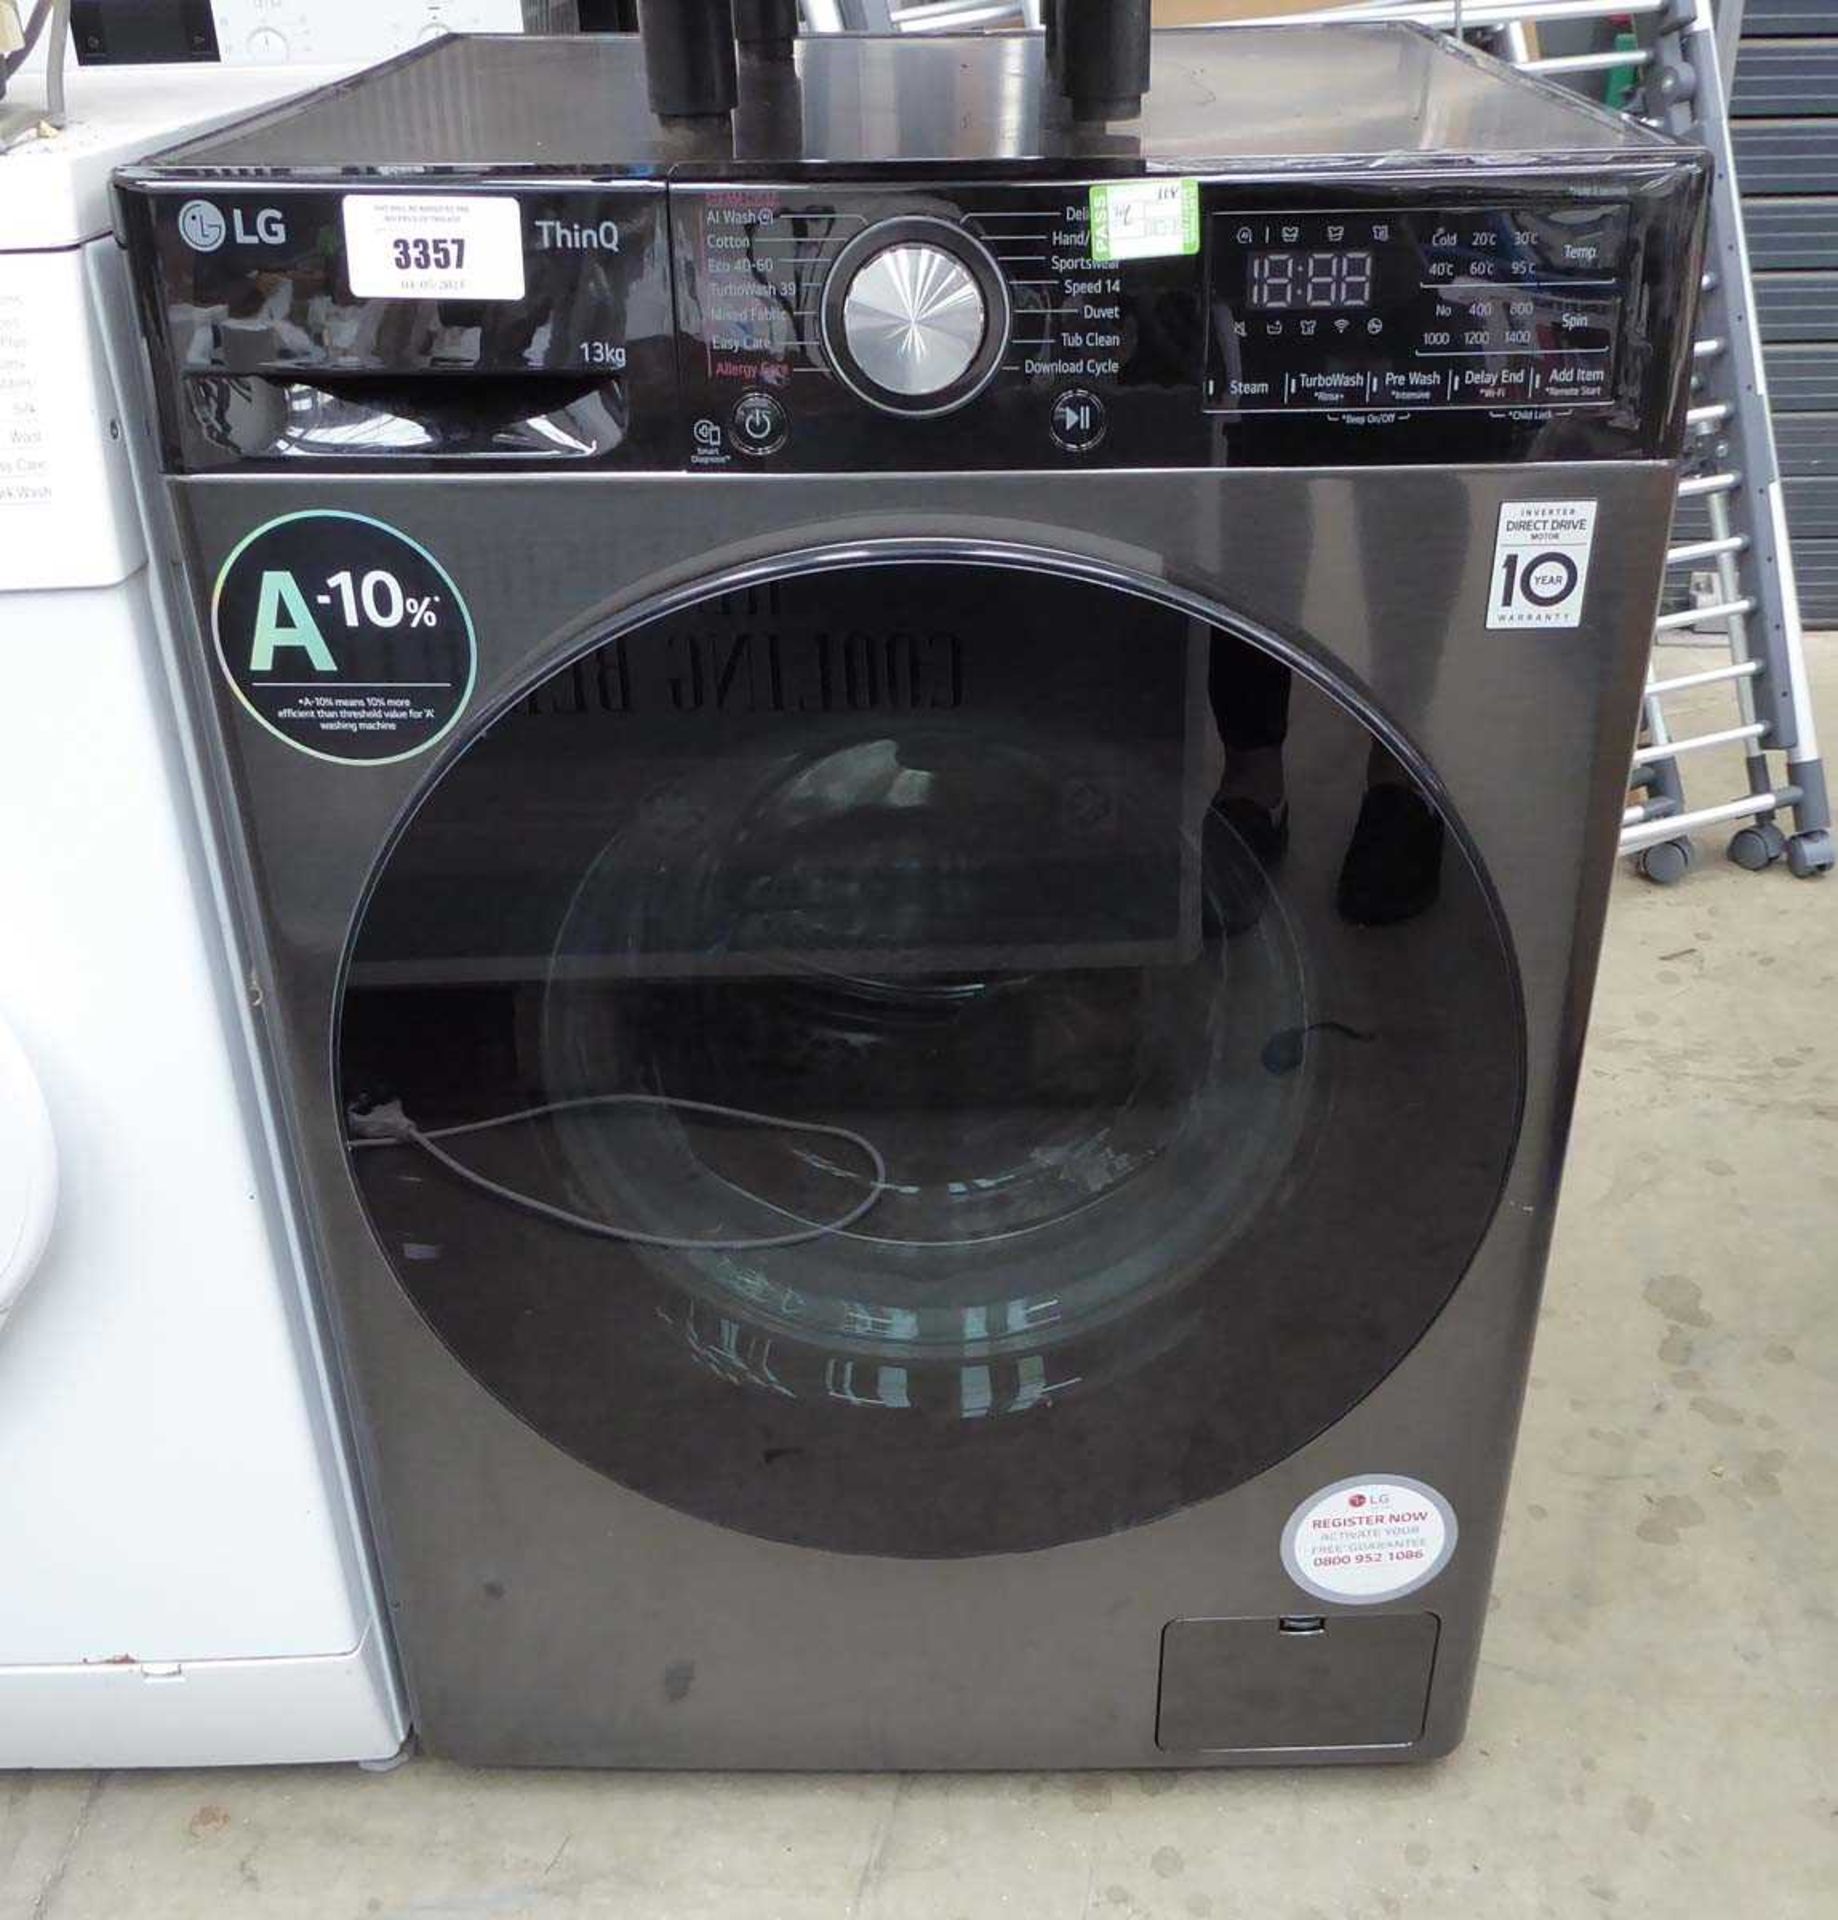 +VAT LG ThinkU 13kg washing machine